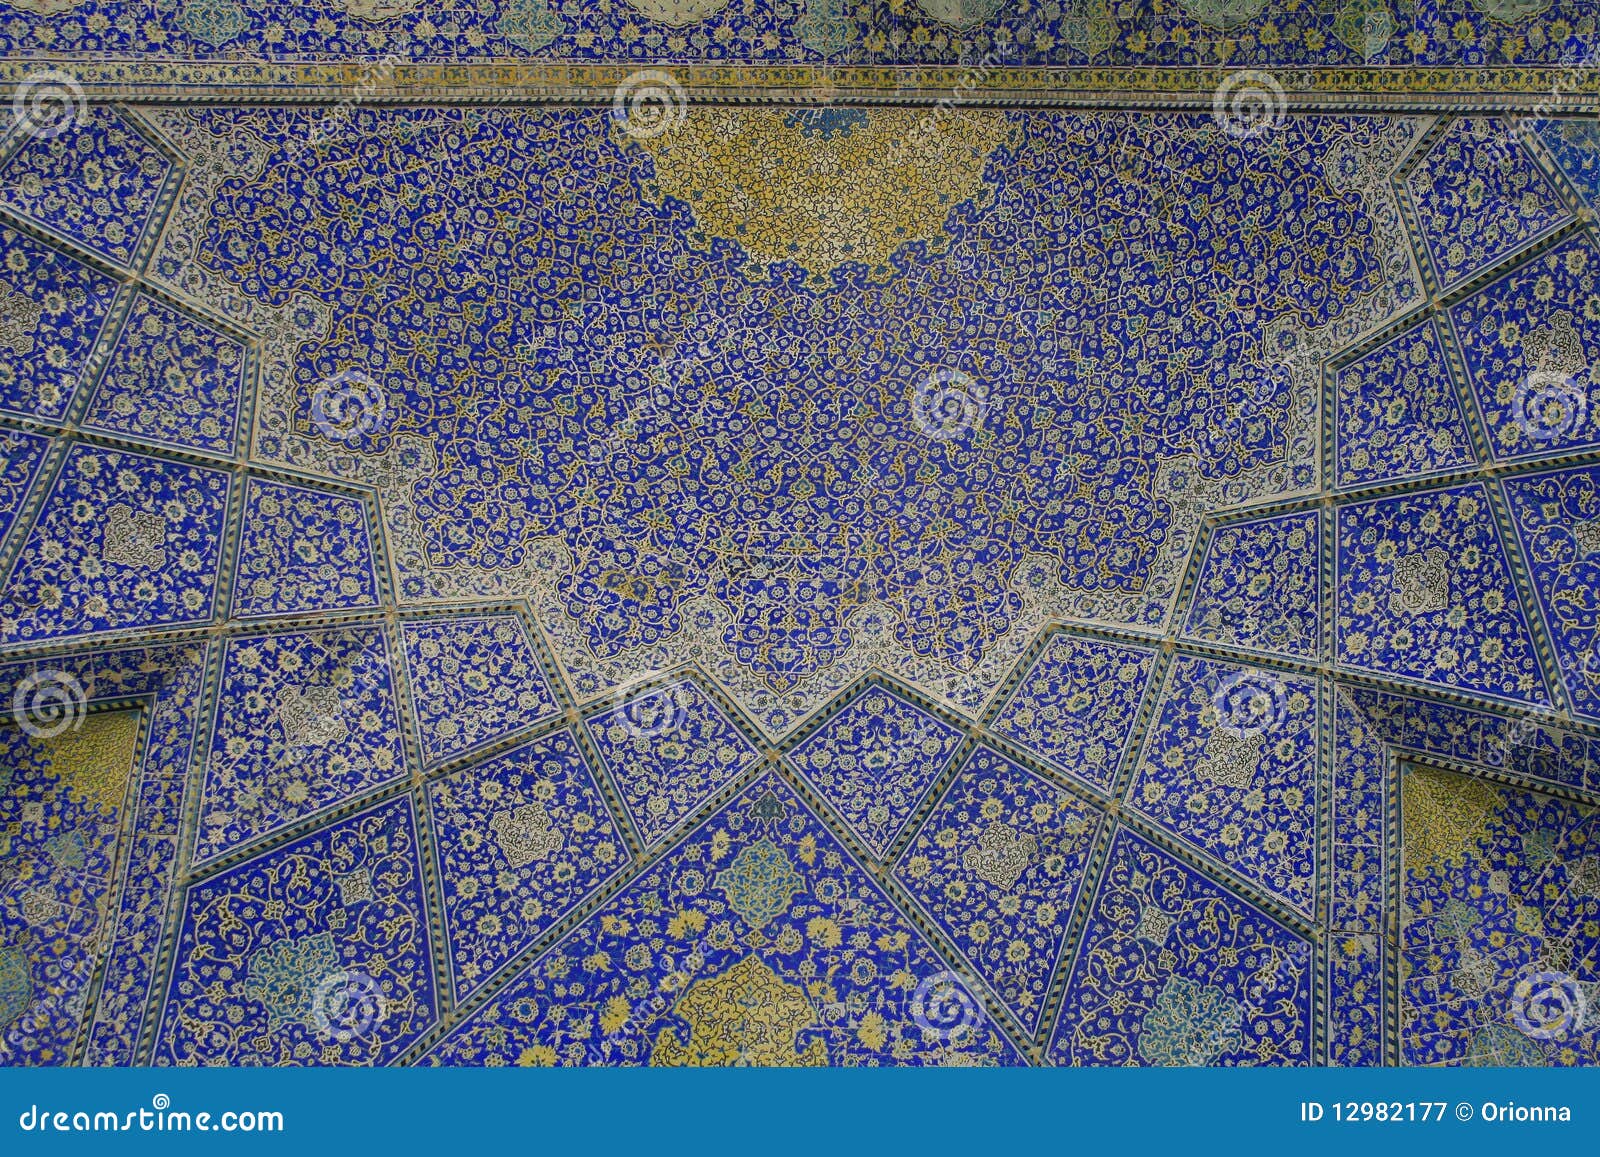 oriental ornaments, isfahan mosque, iran